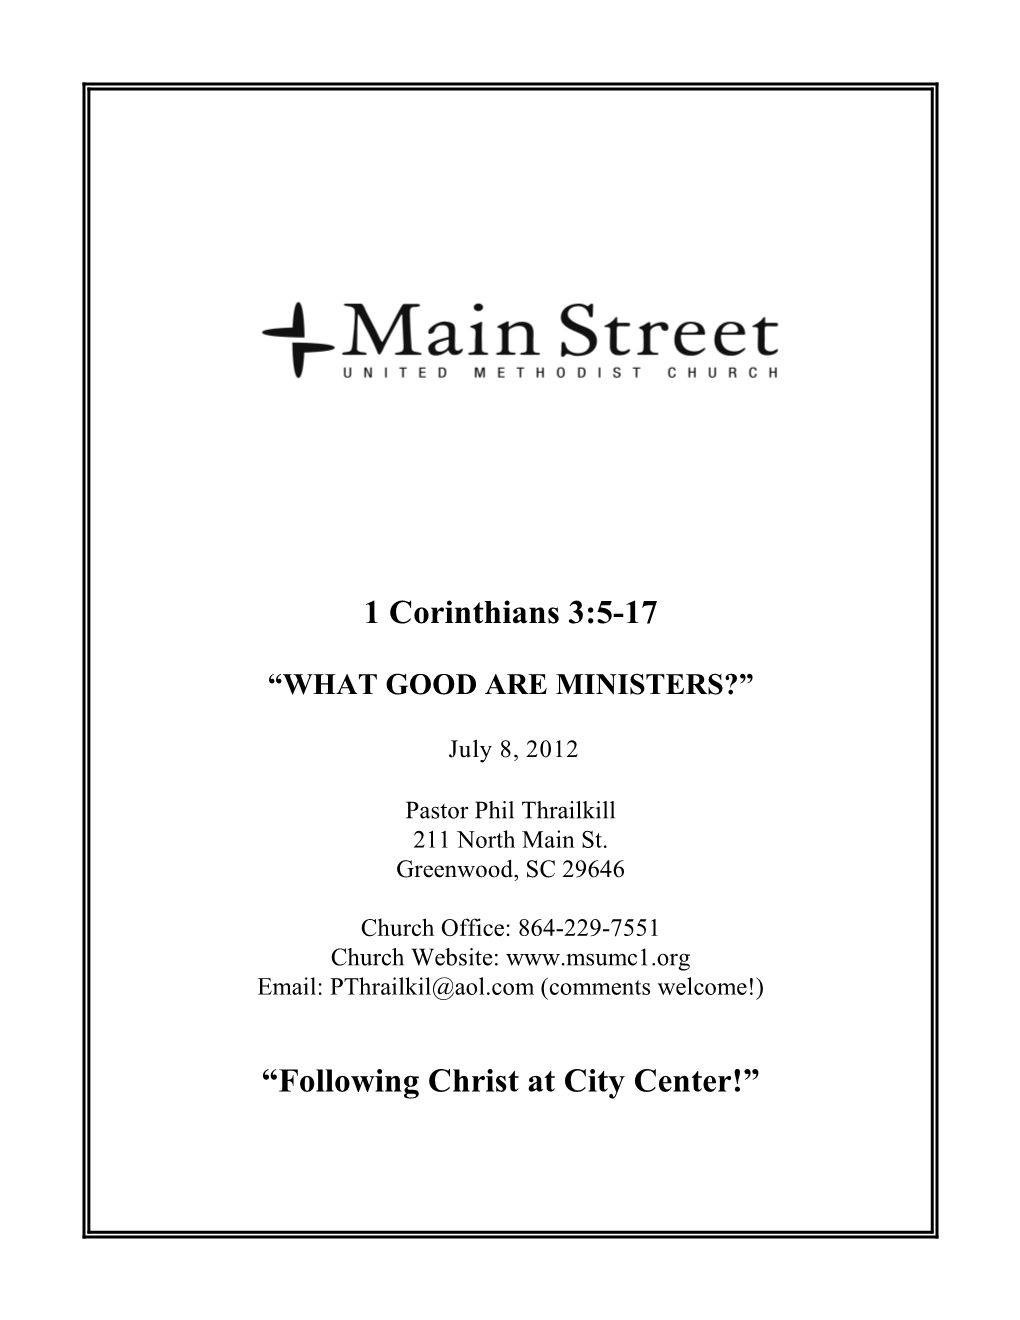 1 Corinthians 3:5-17 “Following Christ at City Center!”